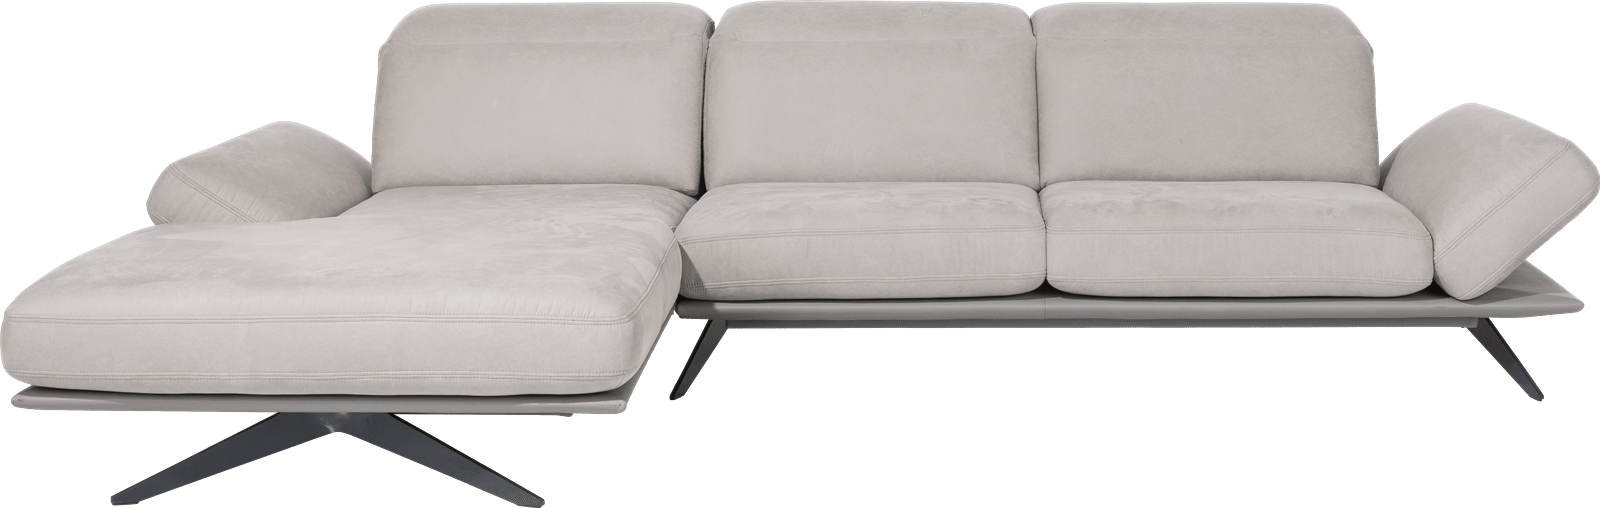 XOOON - Paxos - Minimalistisches Design - Sofas - Longchair links